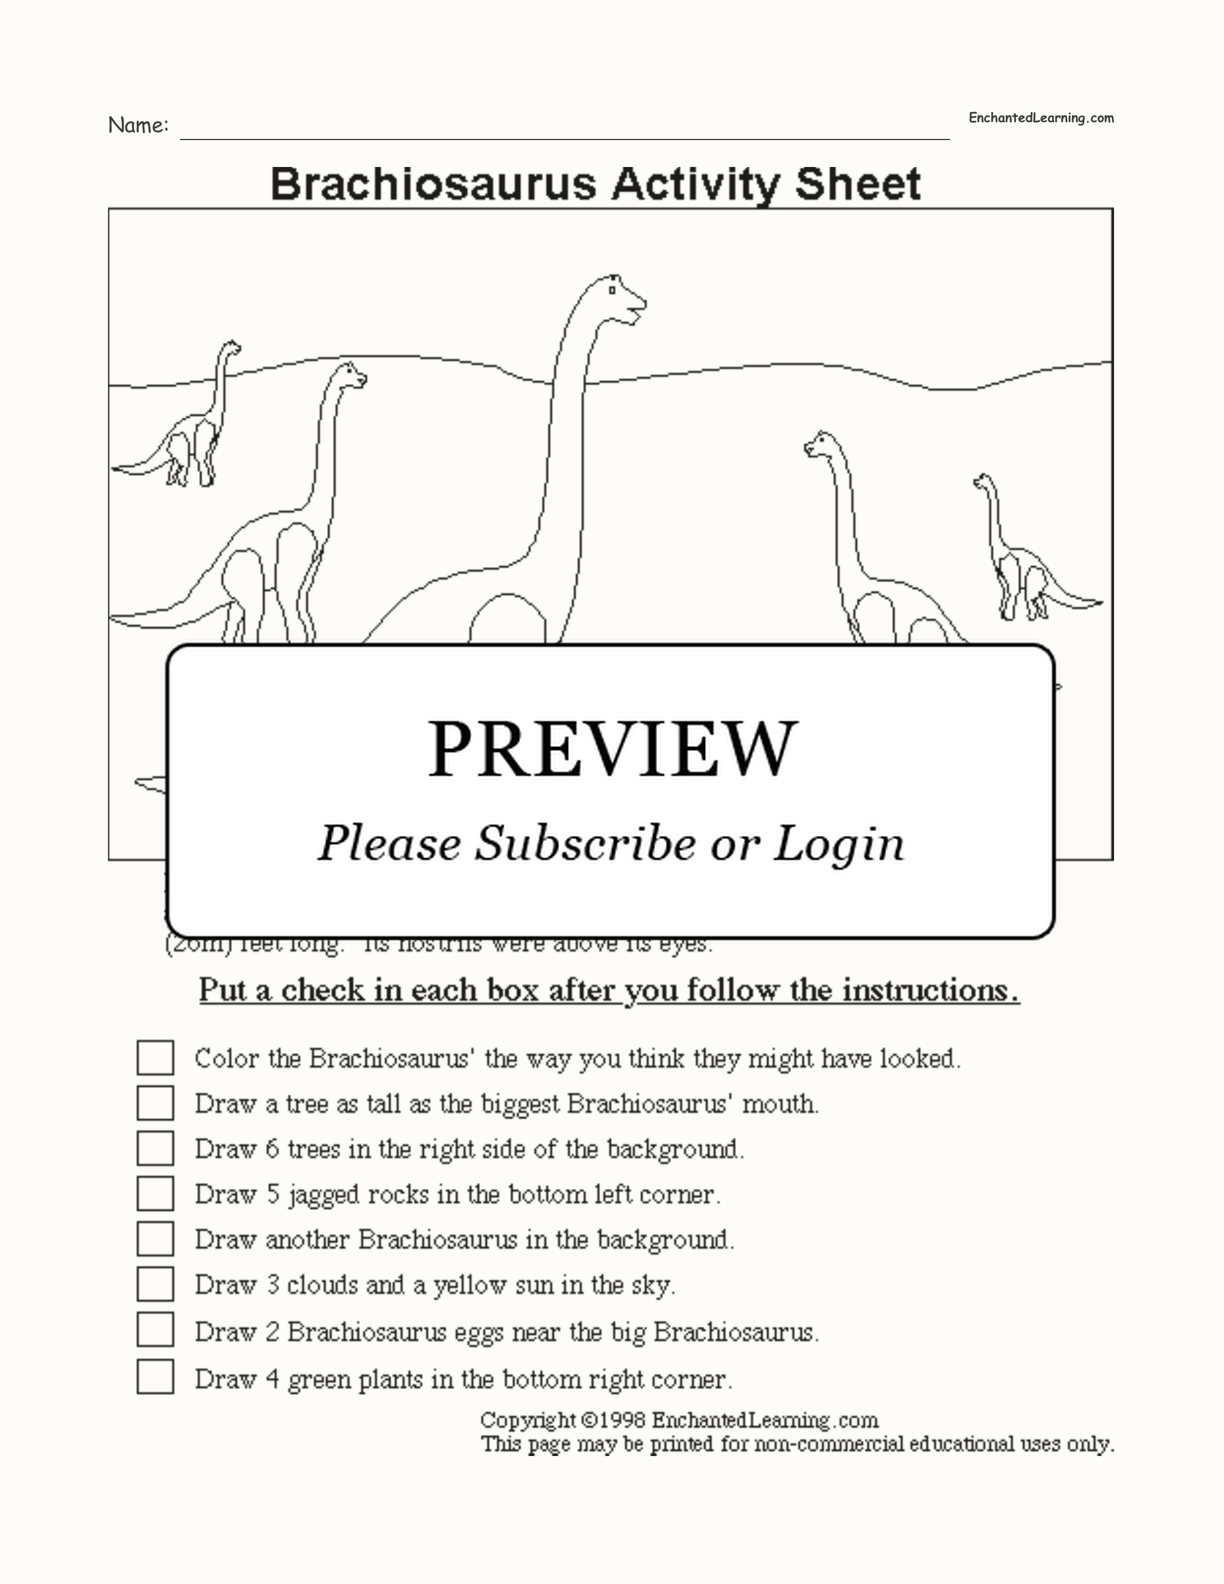 Brachiosaurus Follow the Instructions Worksheet interactive worksheet page 1